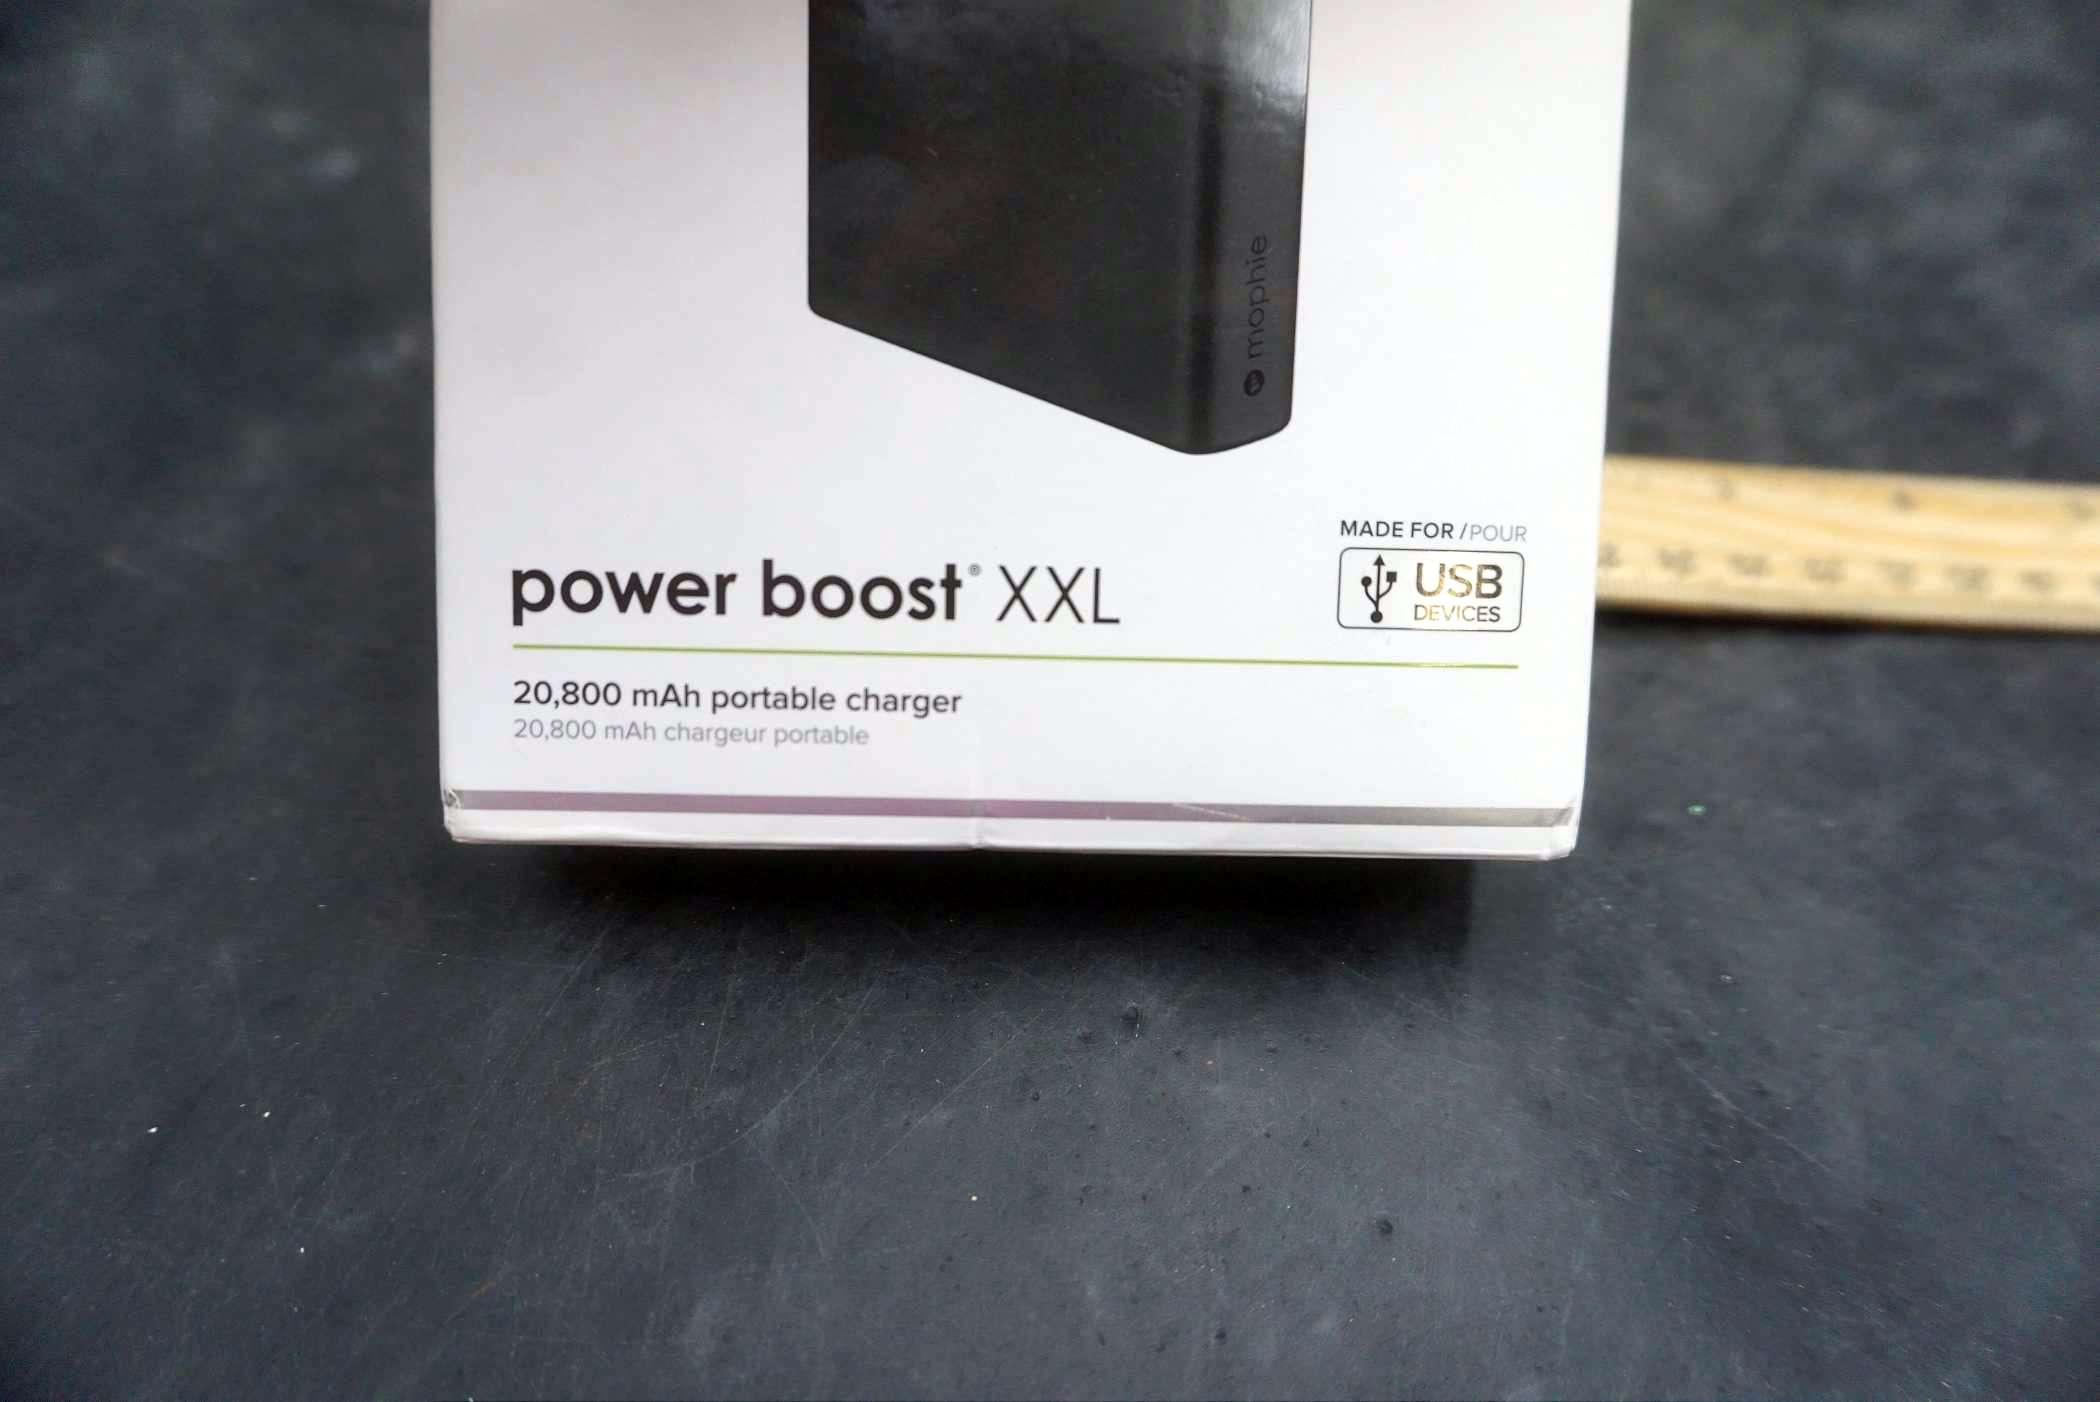 Mophie Power Boost Xxl